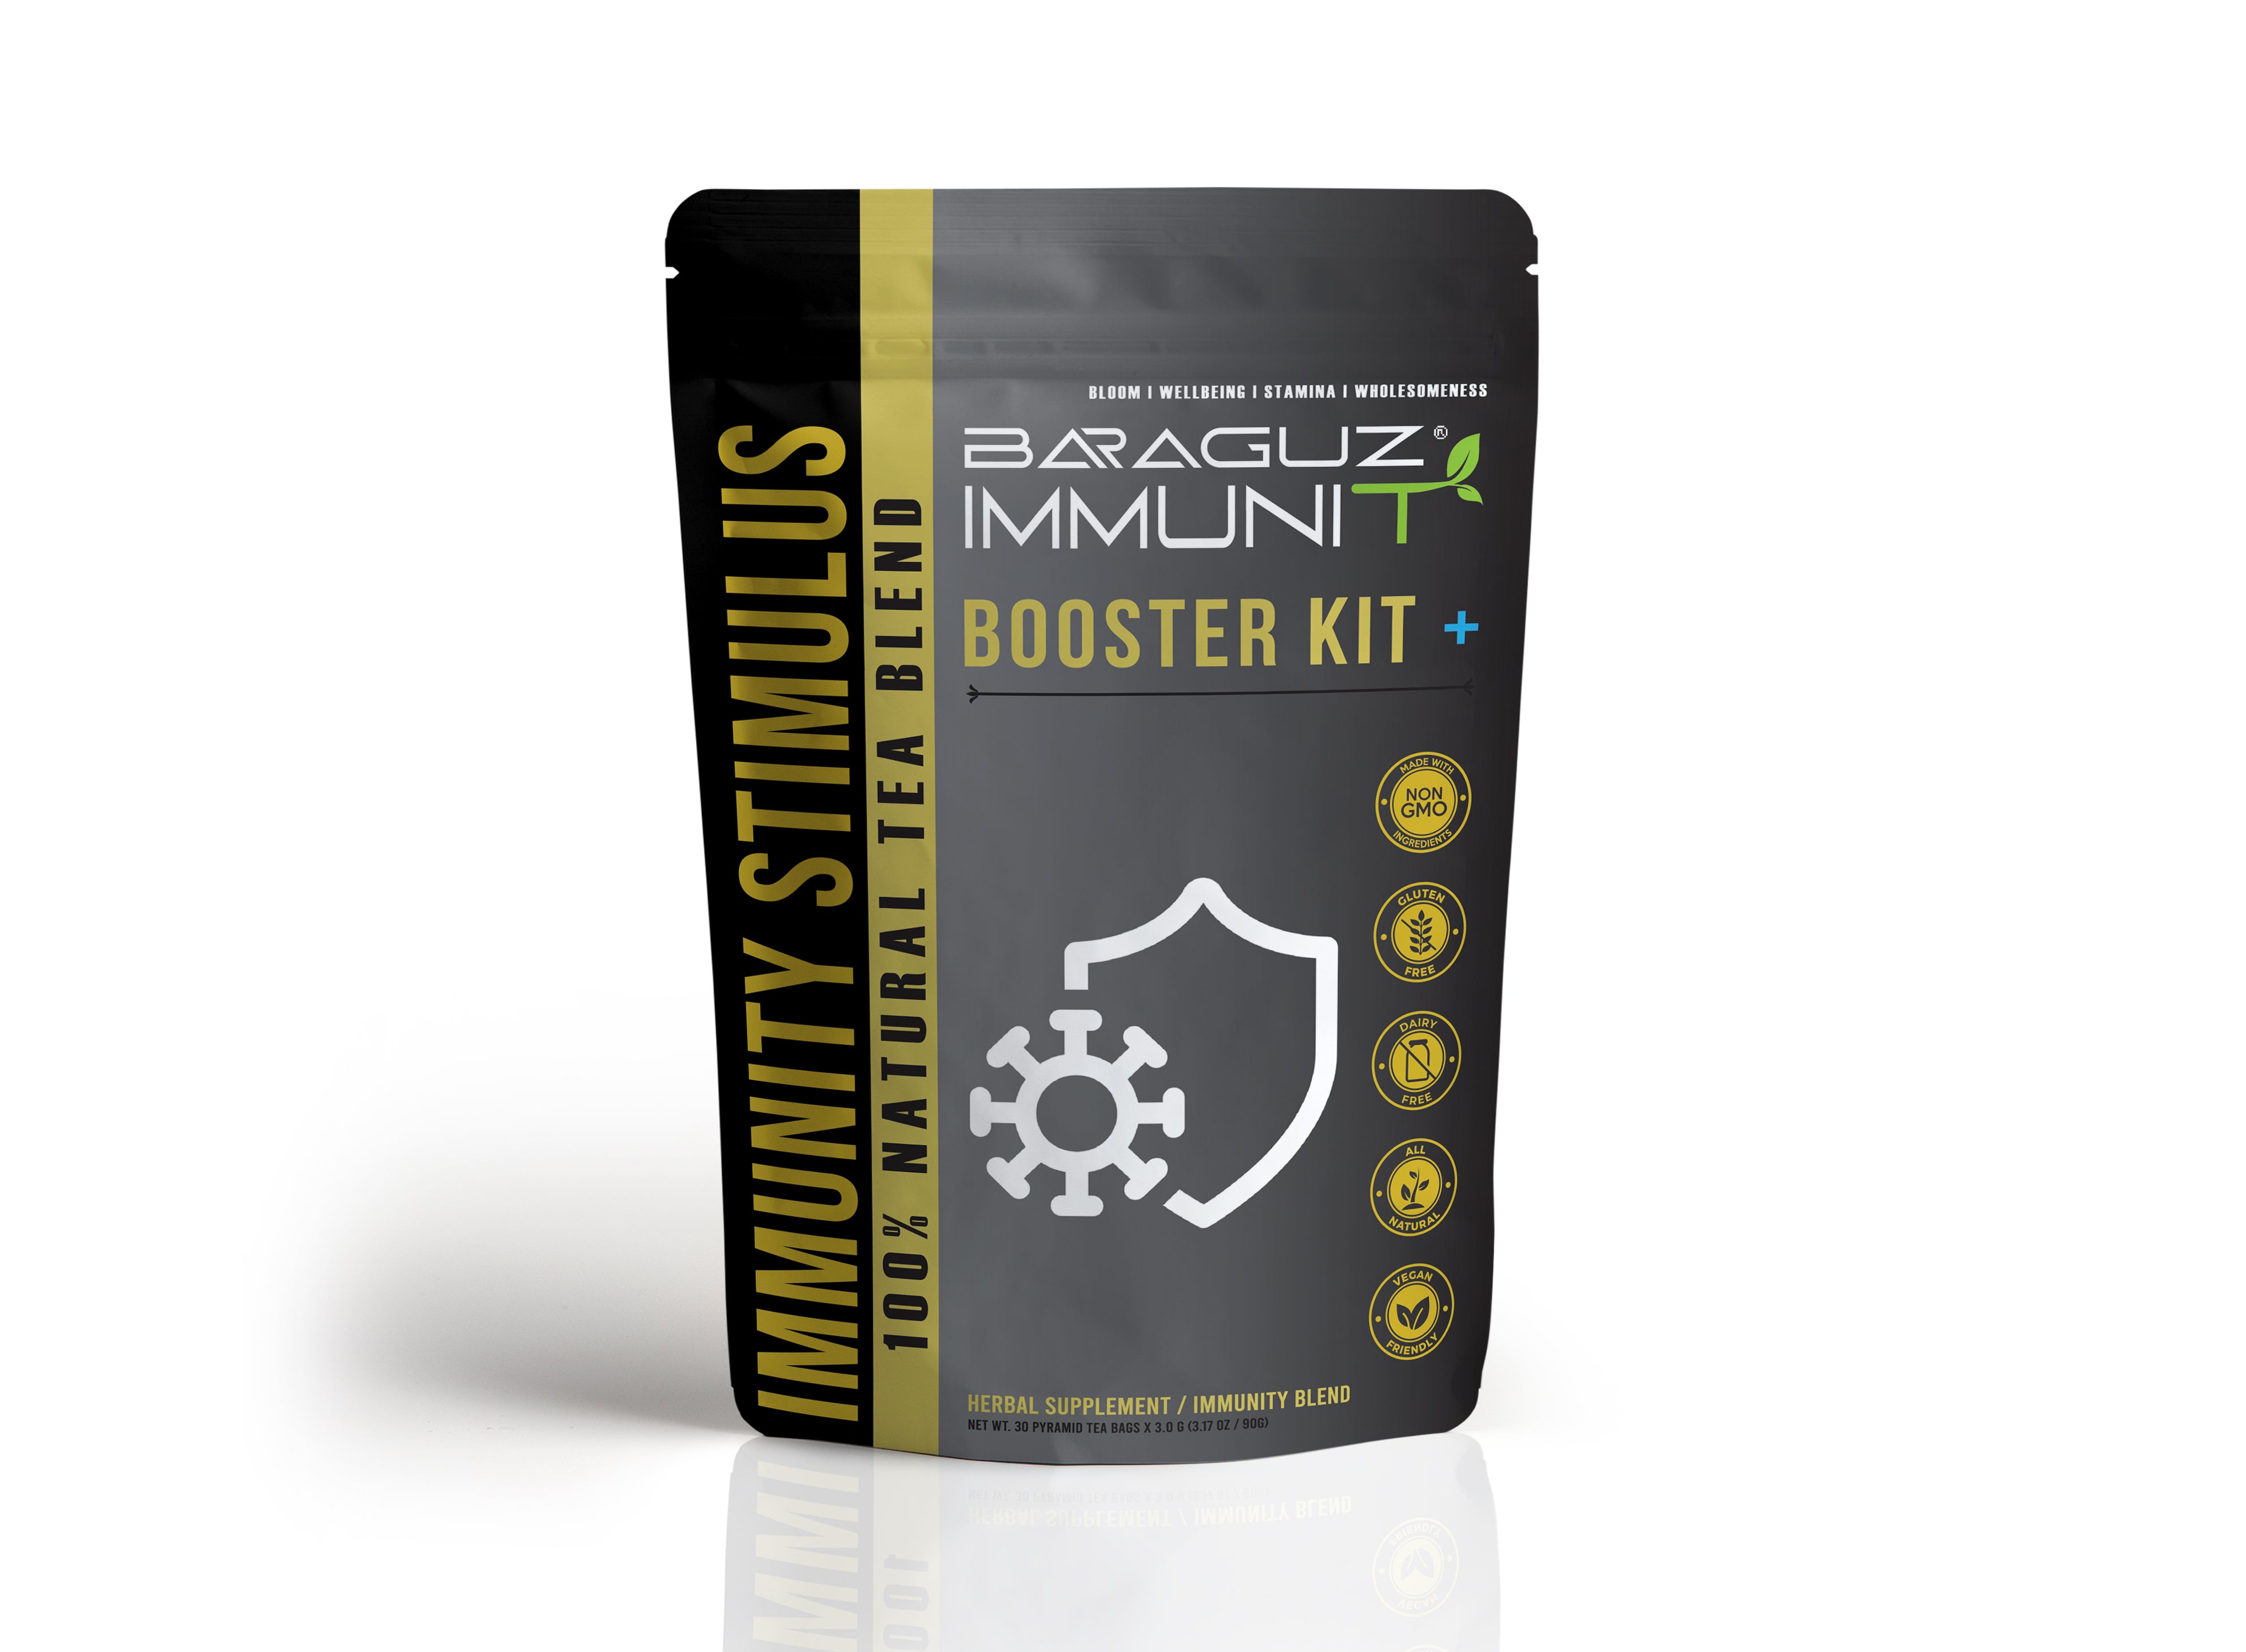 Baraguz ImmuniT - Immunity Stimulus / Booster Kit Tea (30 Servings) -  AVAILABLE NOW